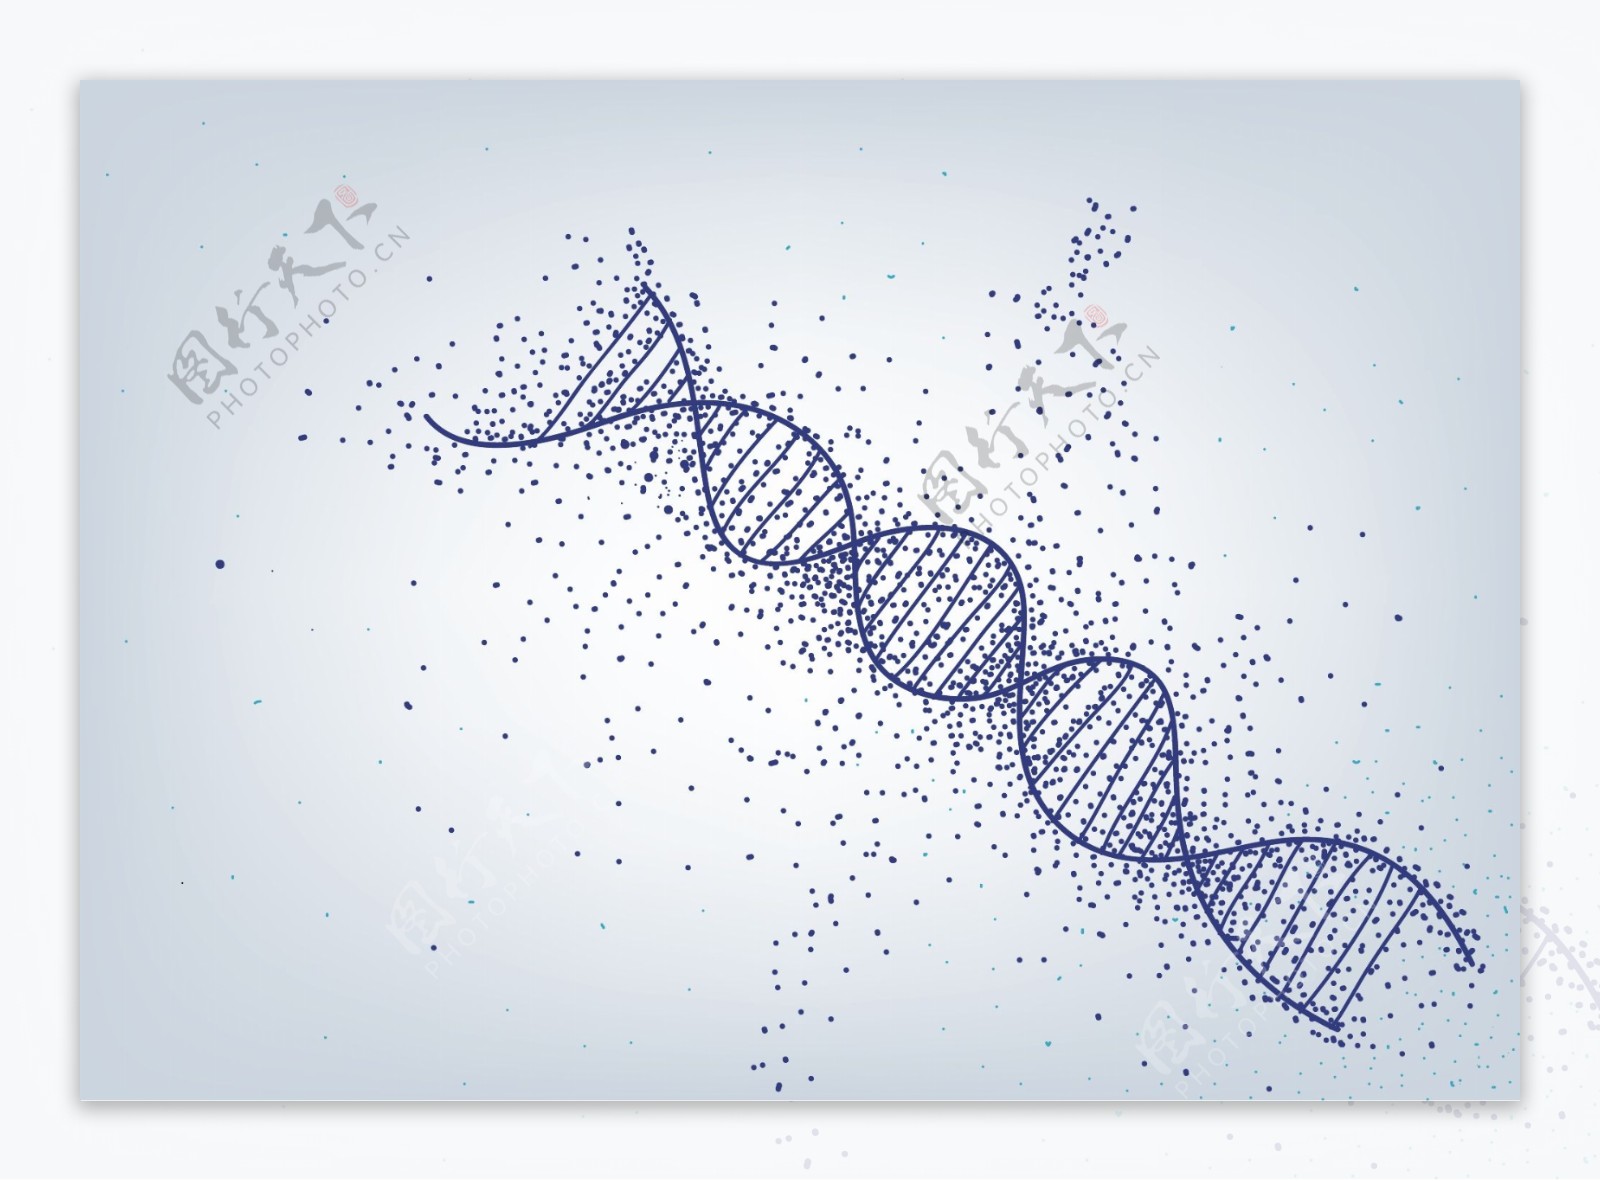 DNA分子生物链矢量背景